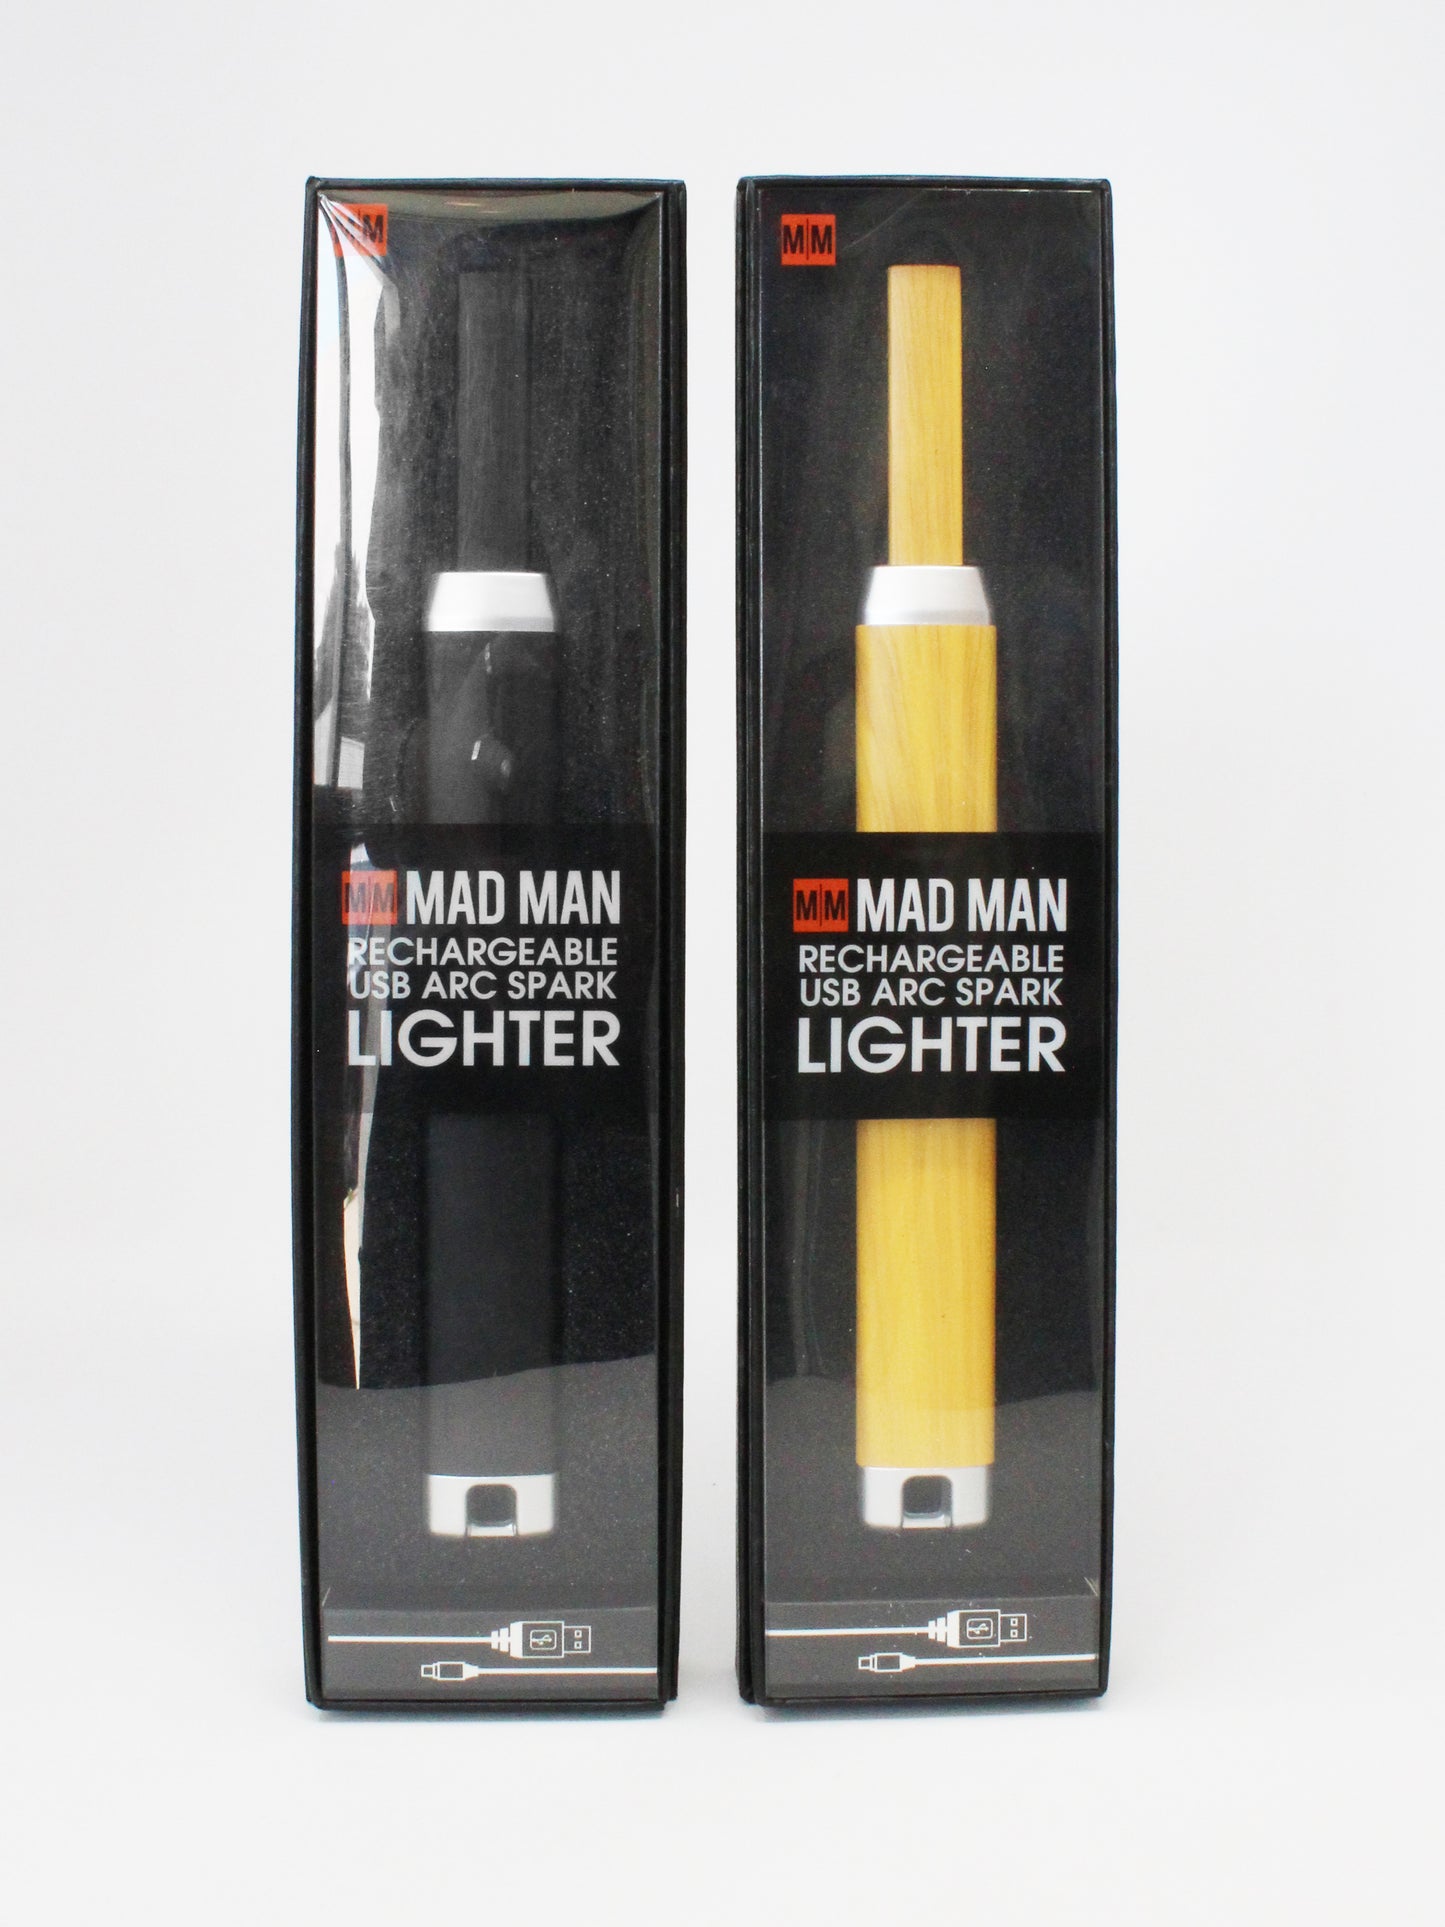 USB Arc Spark Lighter